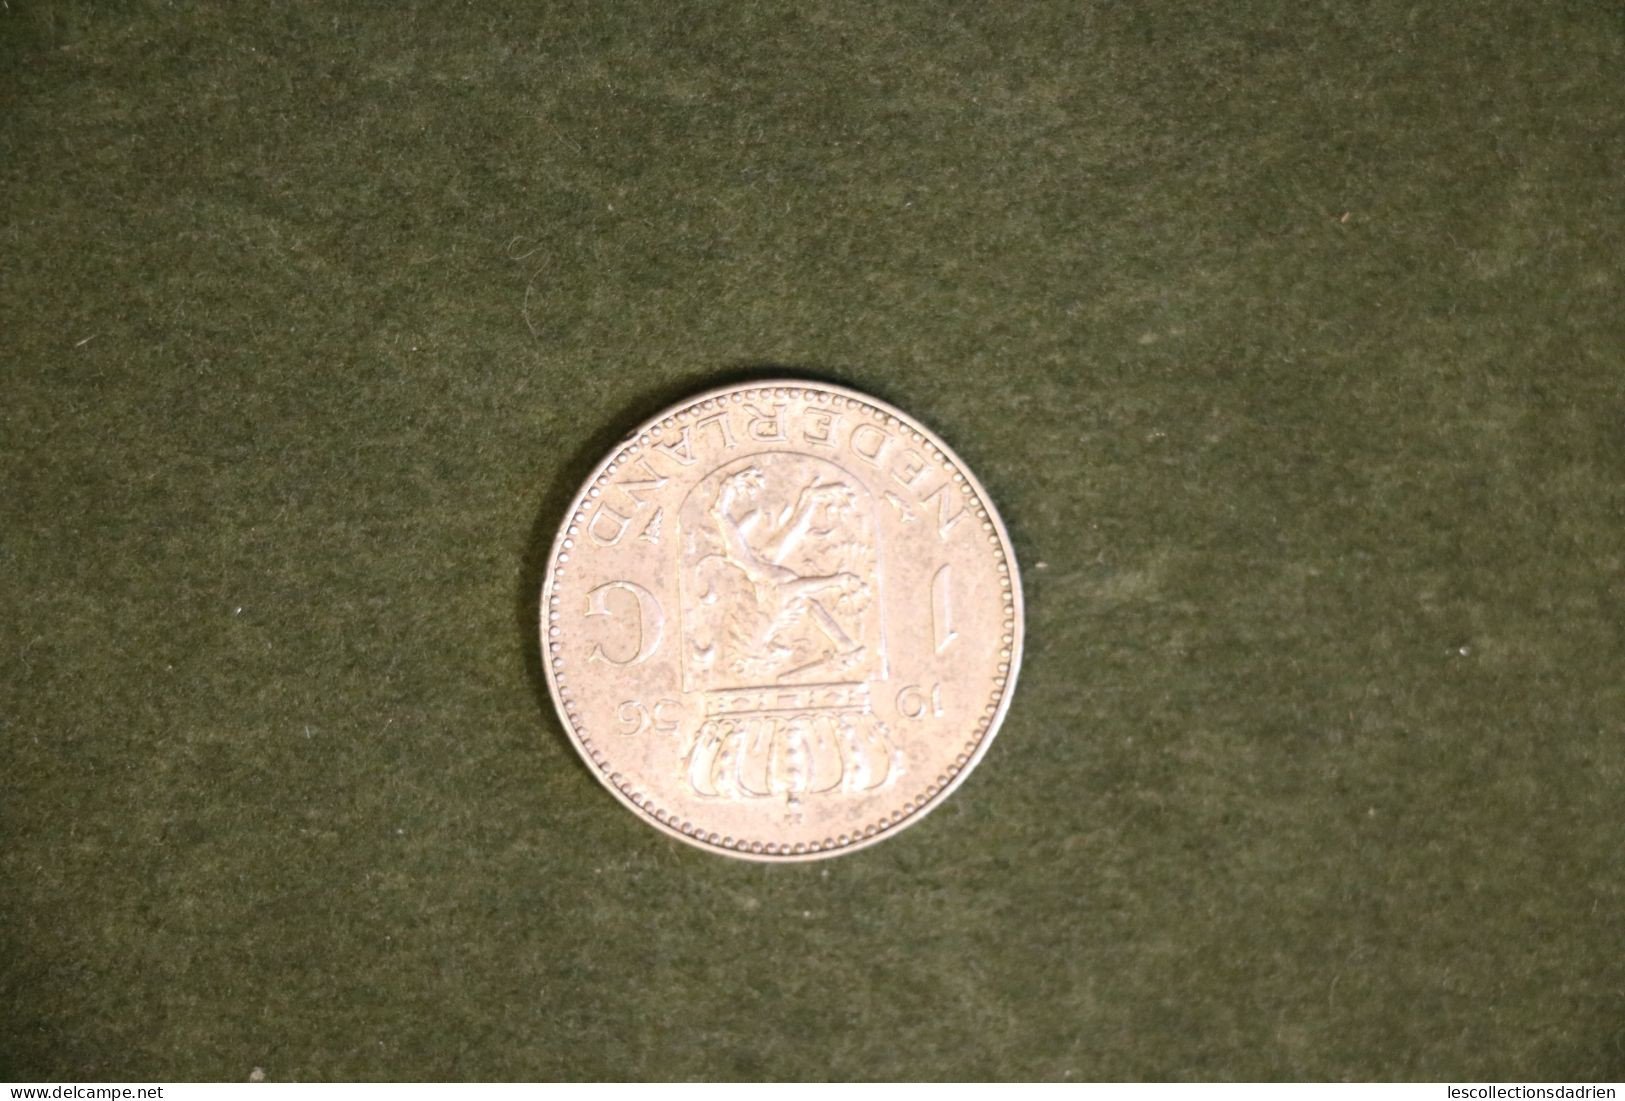 Pièce En Argent Des Pays-Bas 1 Gulden 1956  - Dutch Silver Coin/1 - 1948-1980: Juliana